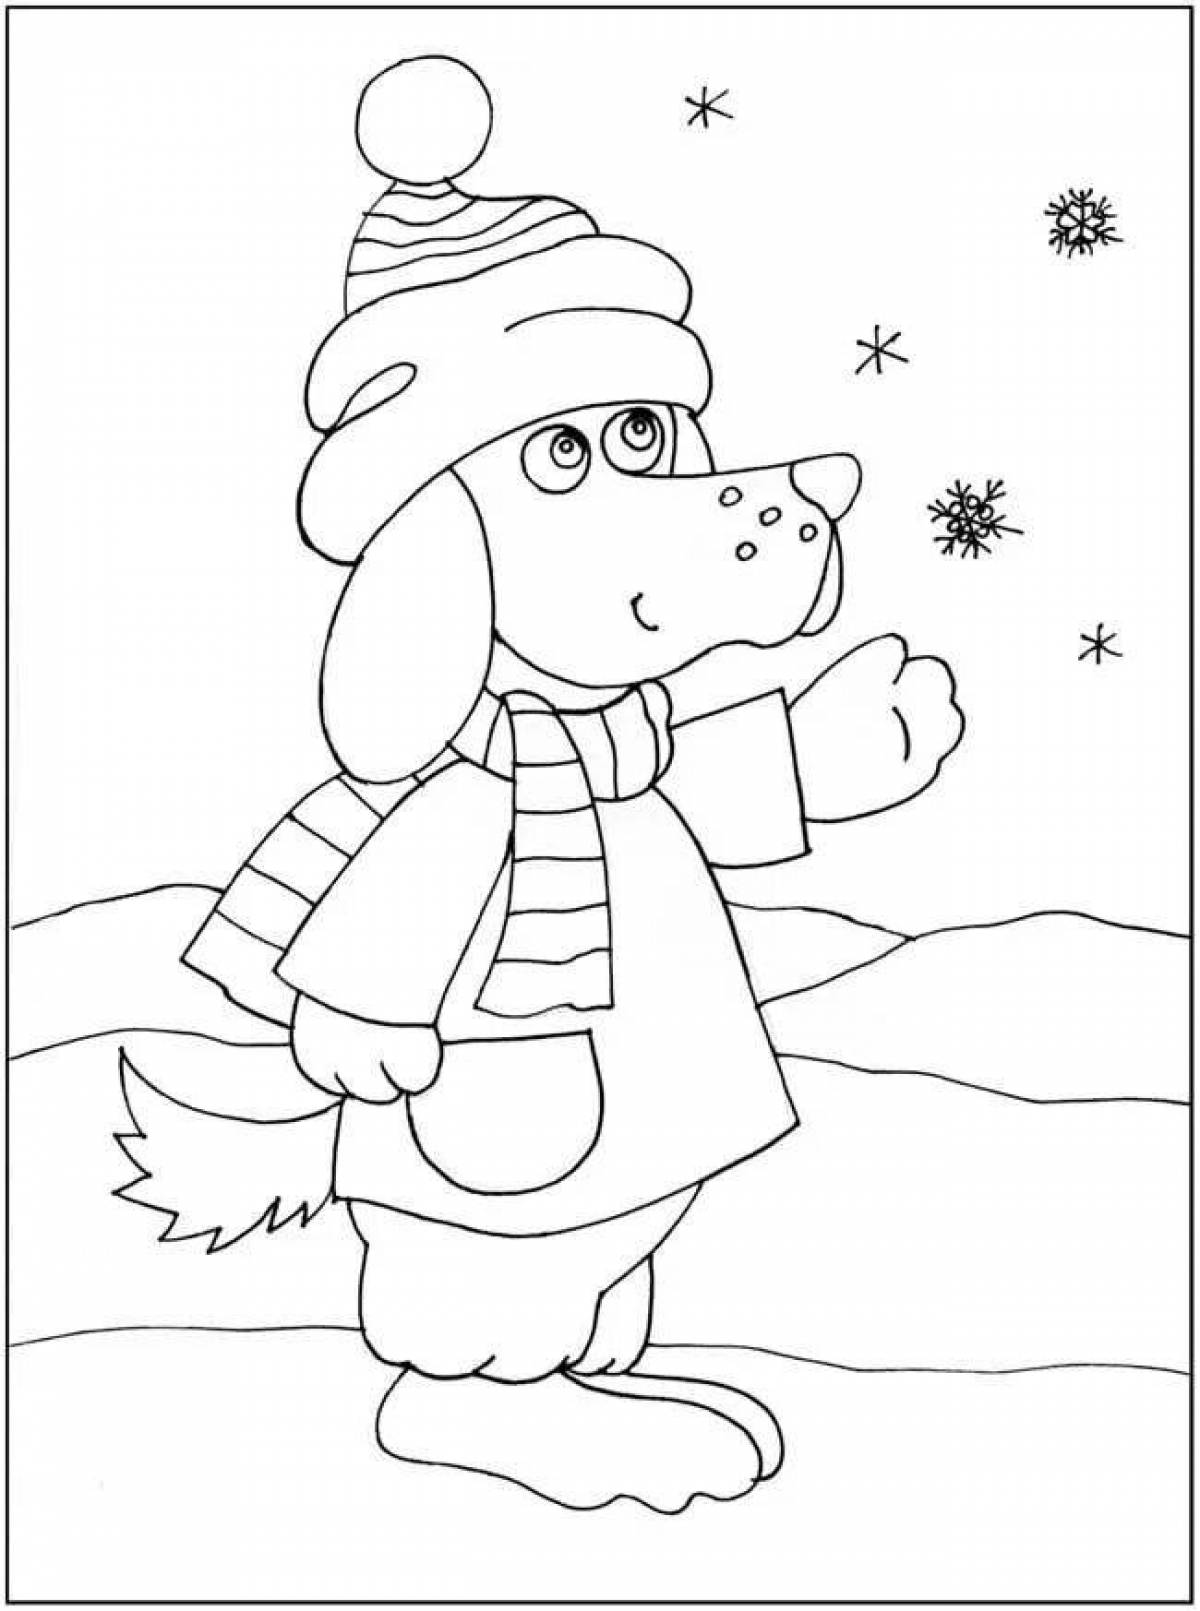 Bright Christmas dog coloring book